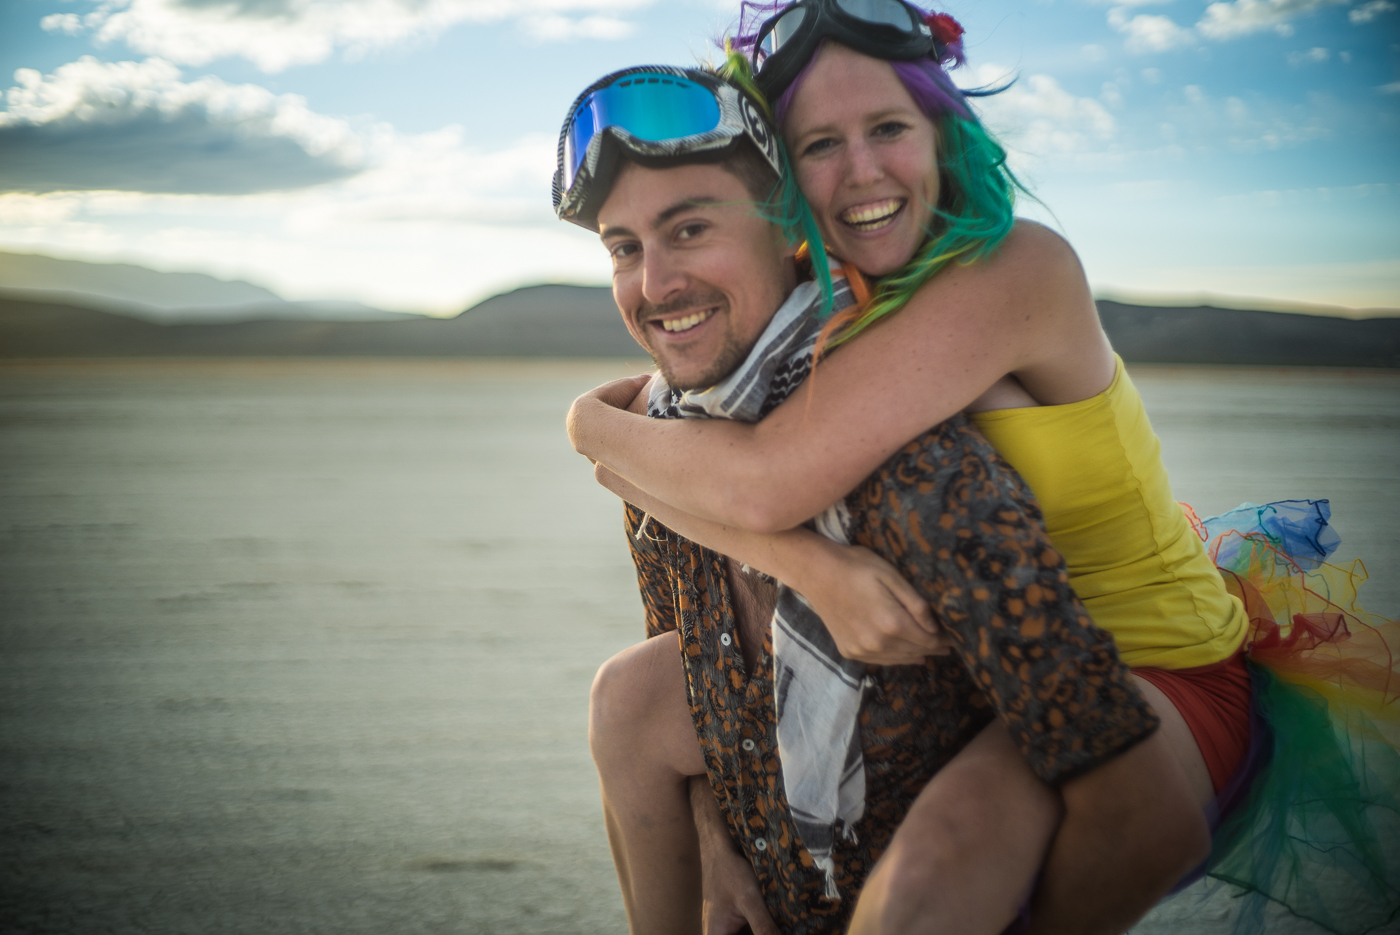 Burning Man 2014: Portraits of a Camp on northtosouth.us